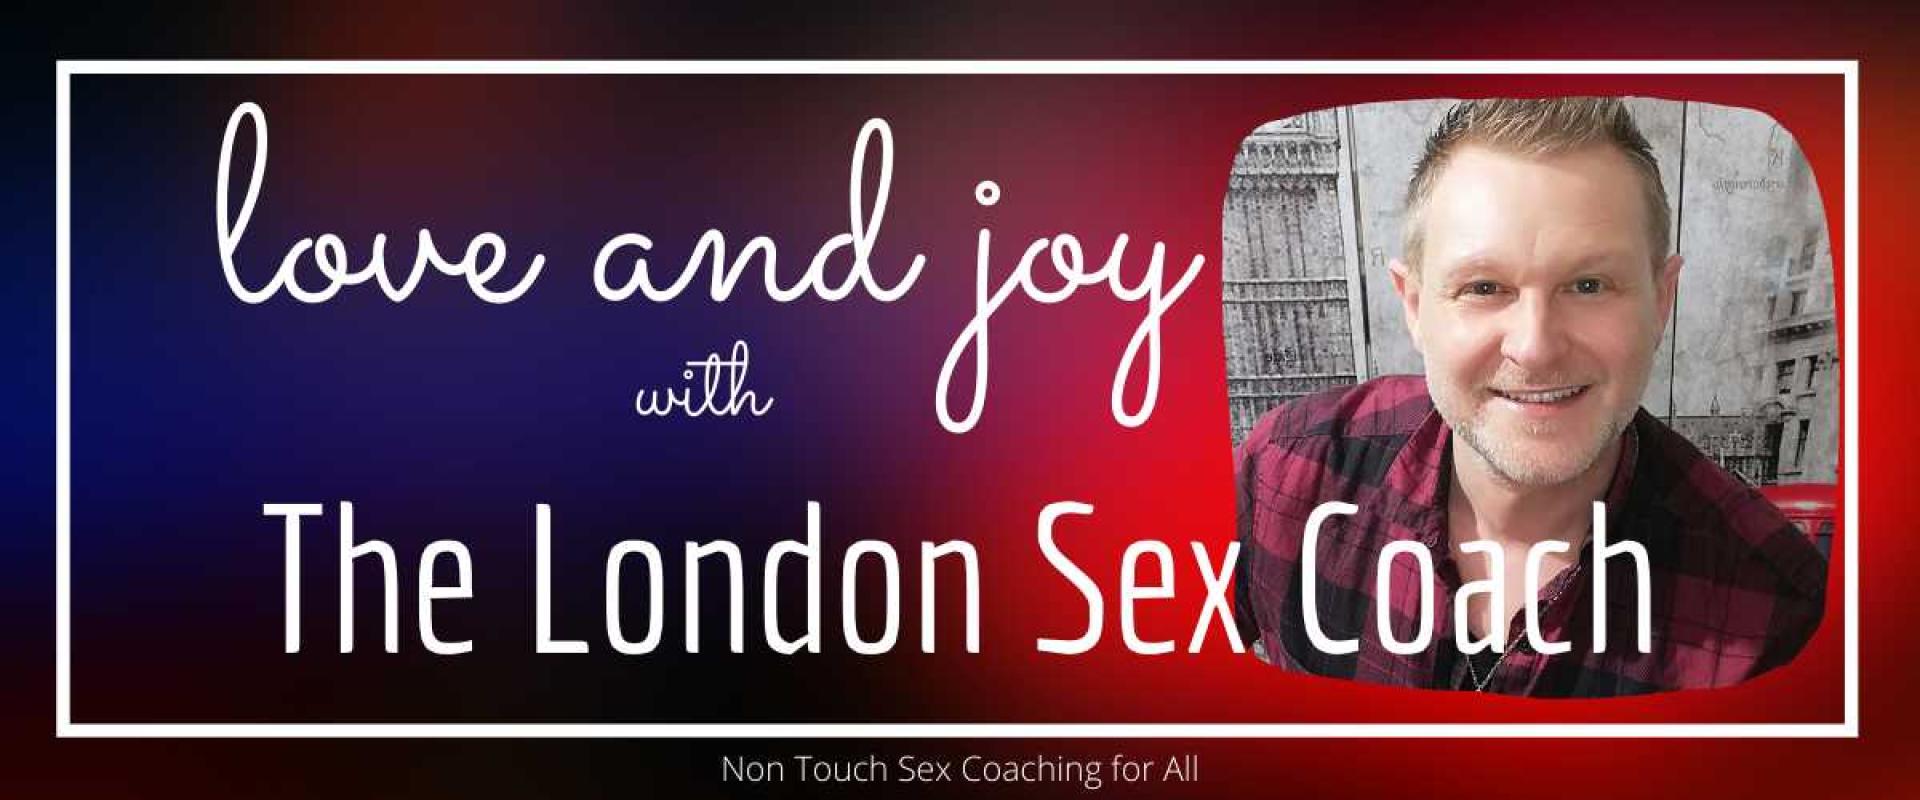 Matt Valentine Chase London Sex Coach Therapist